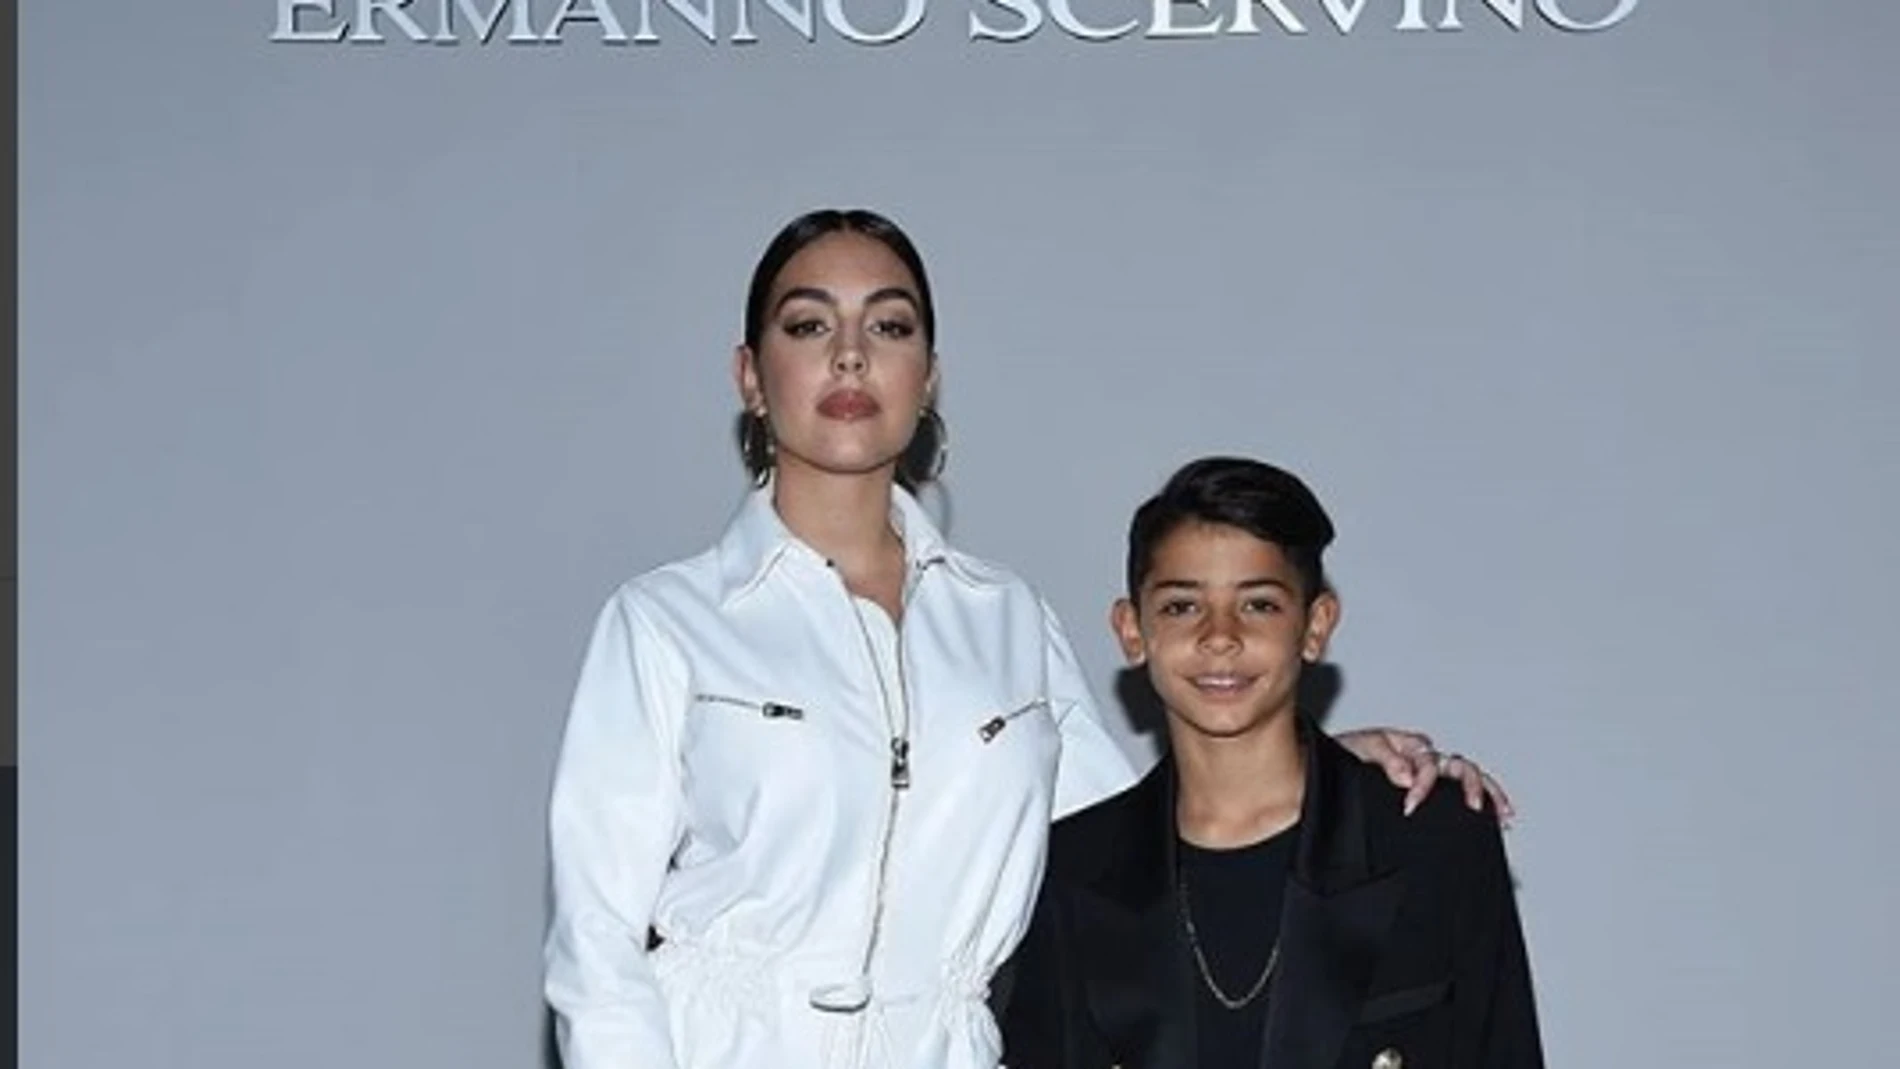 "Mini "Cristiano Ronaldo junto a Giorgina en la Milan Fashion Week